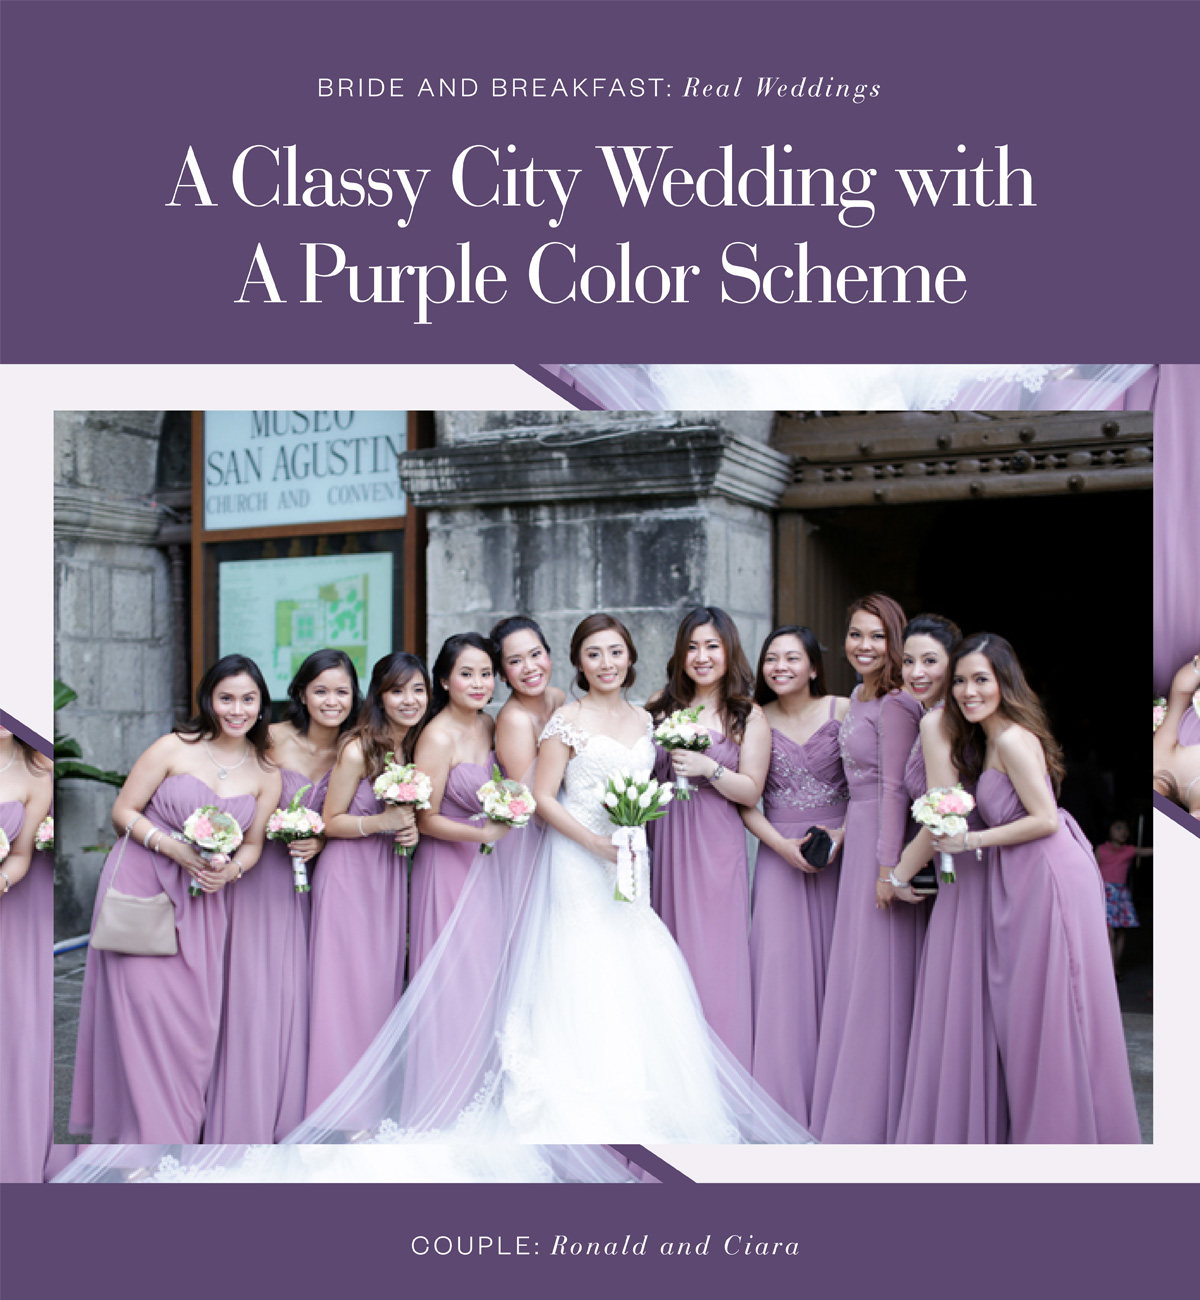 A classy city wedding with a purple color scheme